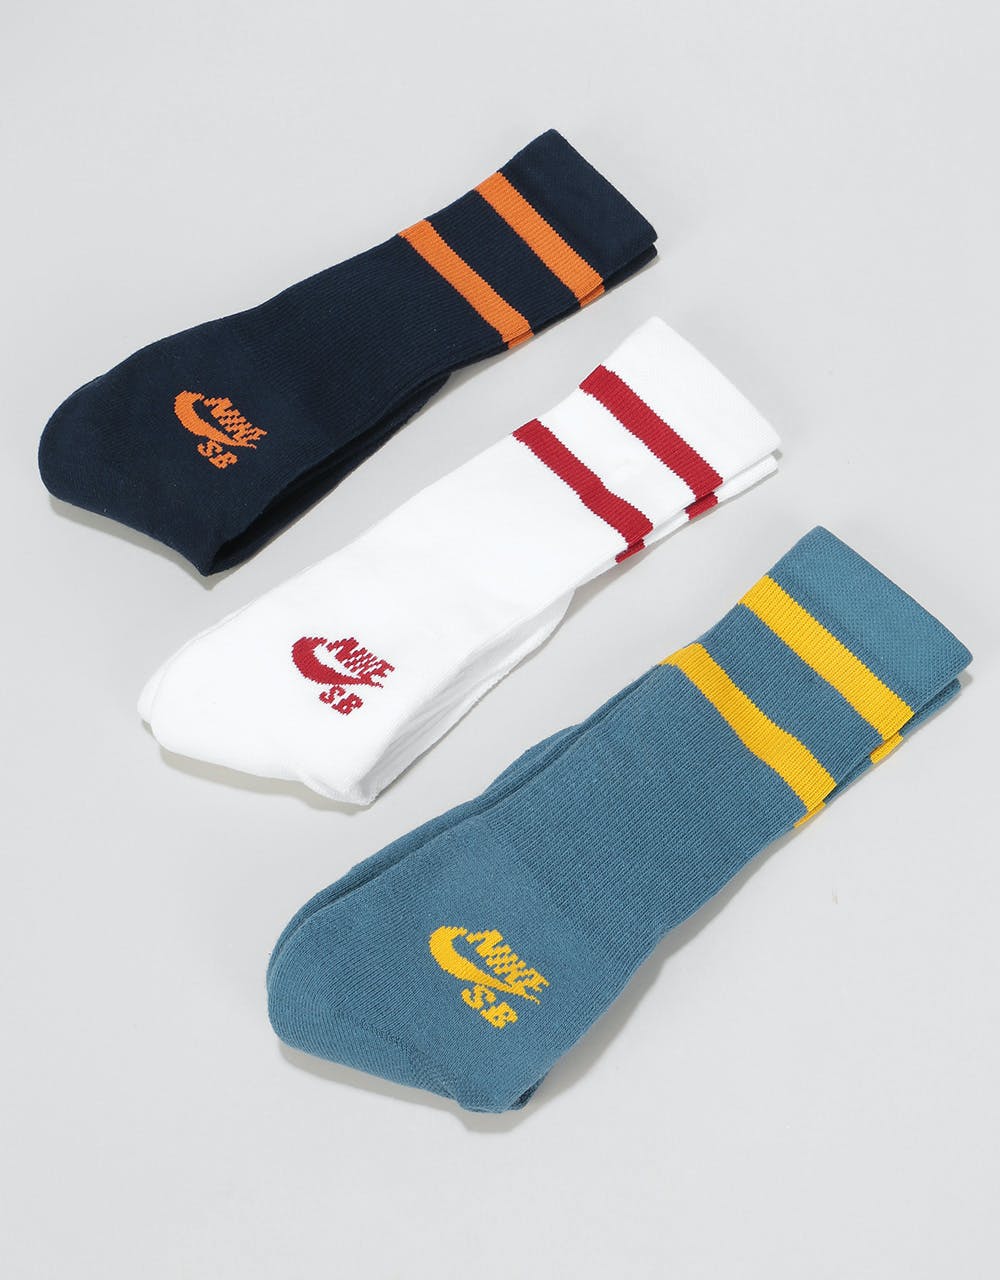 Nike SB Crew Socks 3 Pack - Multi Colour